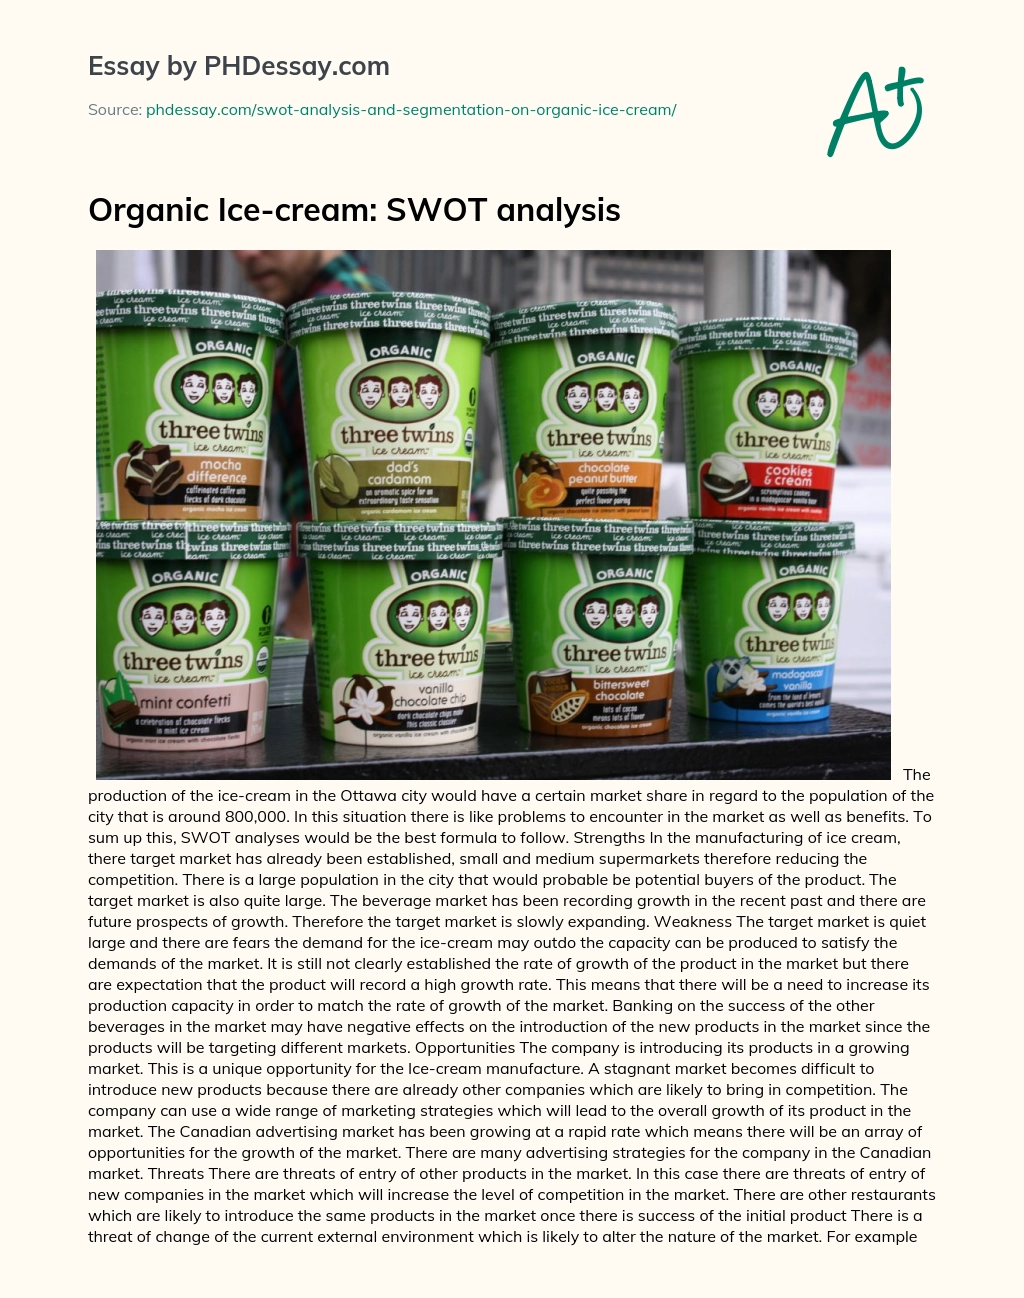 Organic Ice-cream: SWOT analysis essay